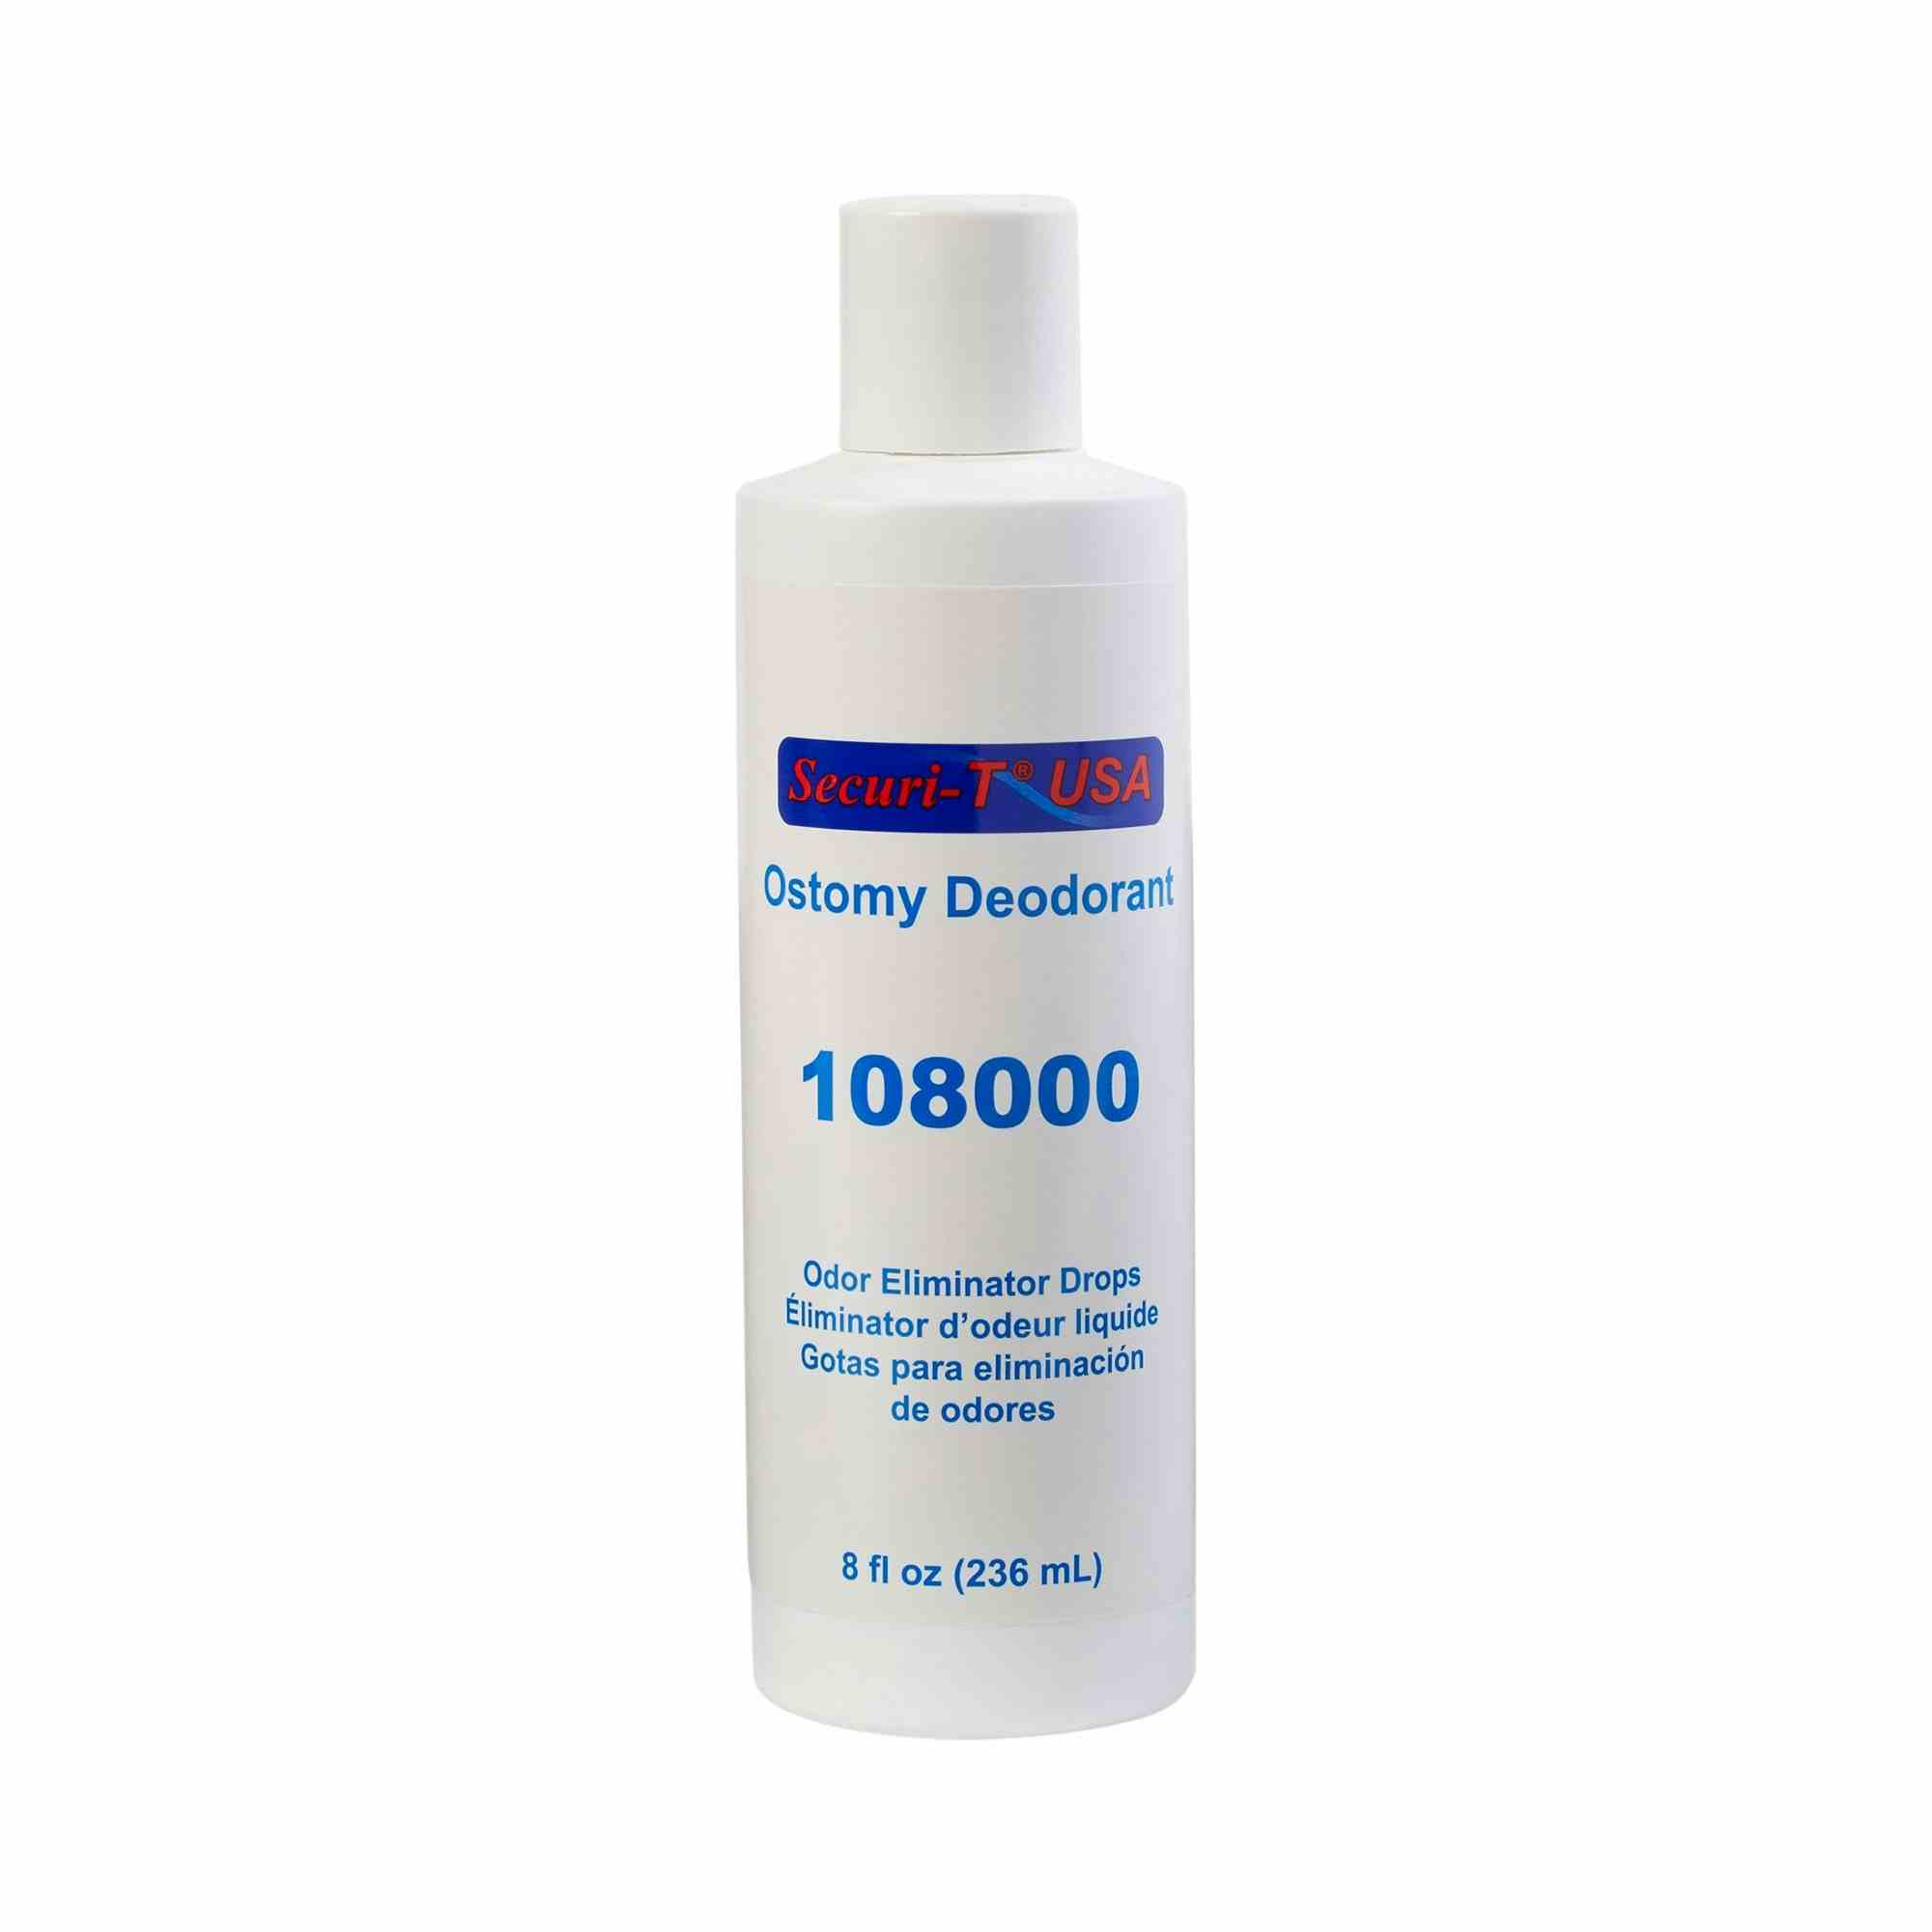 Securi-T USA Ostomy Deodorant Odor Eliminator Drops, 8 oz., 108000, 1 Each